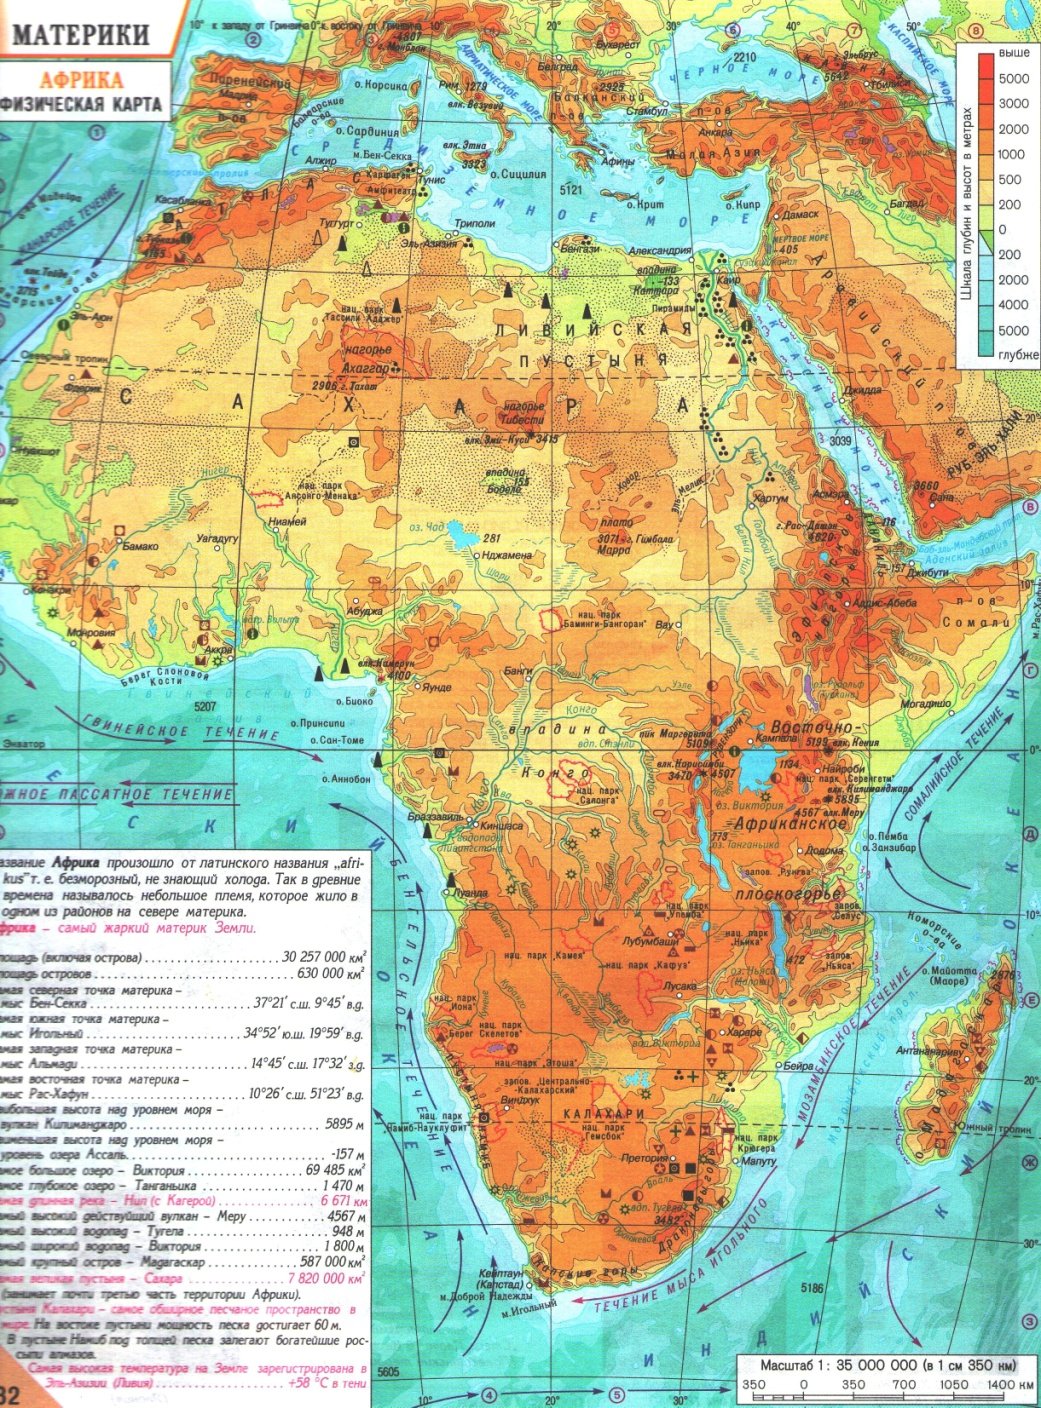 Реки и озера материка африки. Атлас физическая карта Африки. Атлас 7 класс география Африка физическая карта. Ыизическая Катра Африки. Атлас 7 класс география карта Африки.